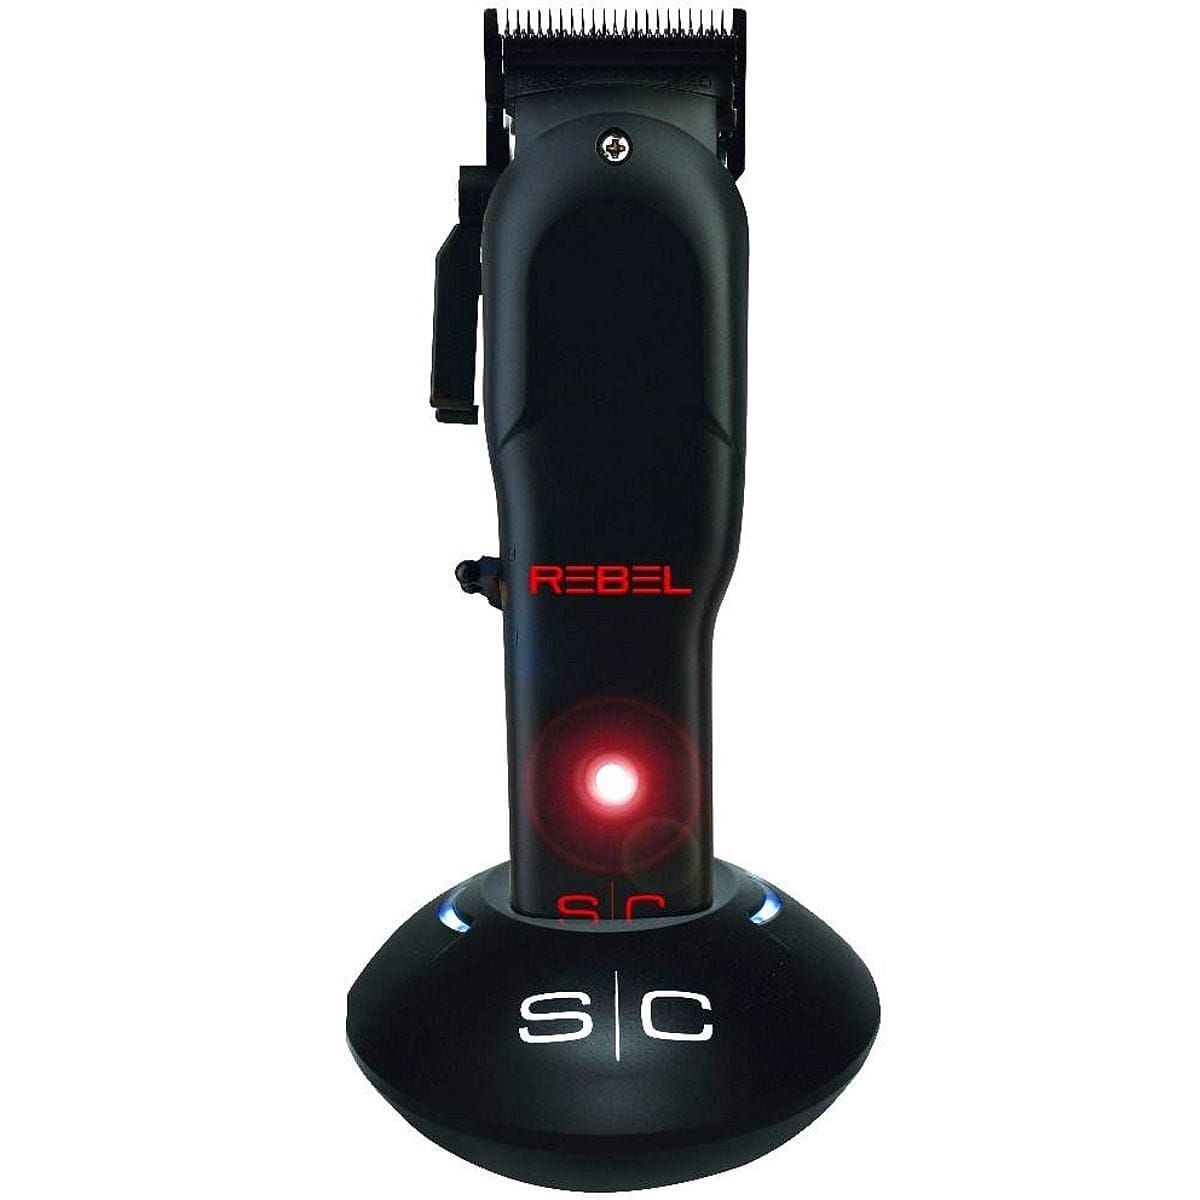 Stylecraft REBEL Professional Super-Torque Modular Cordless Hair Clipper #SC601 (Dual Voltage)